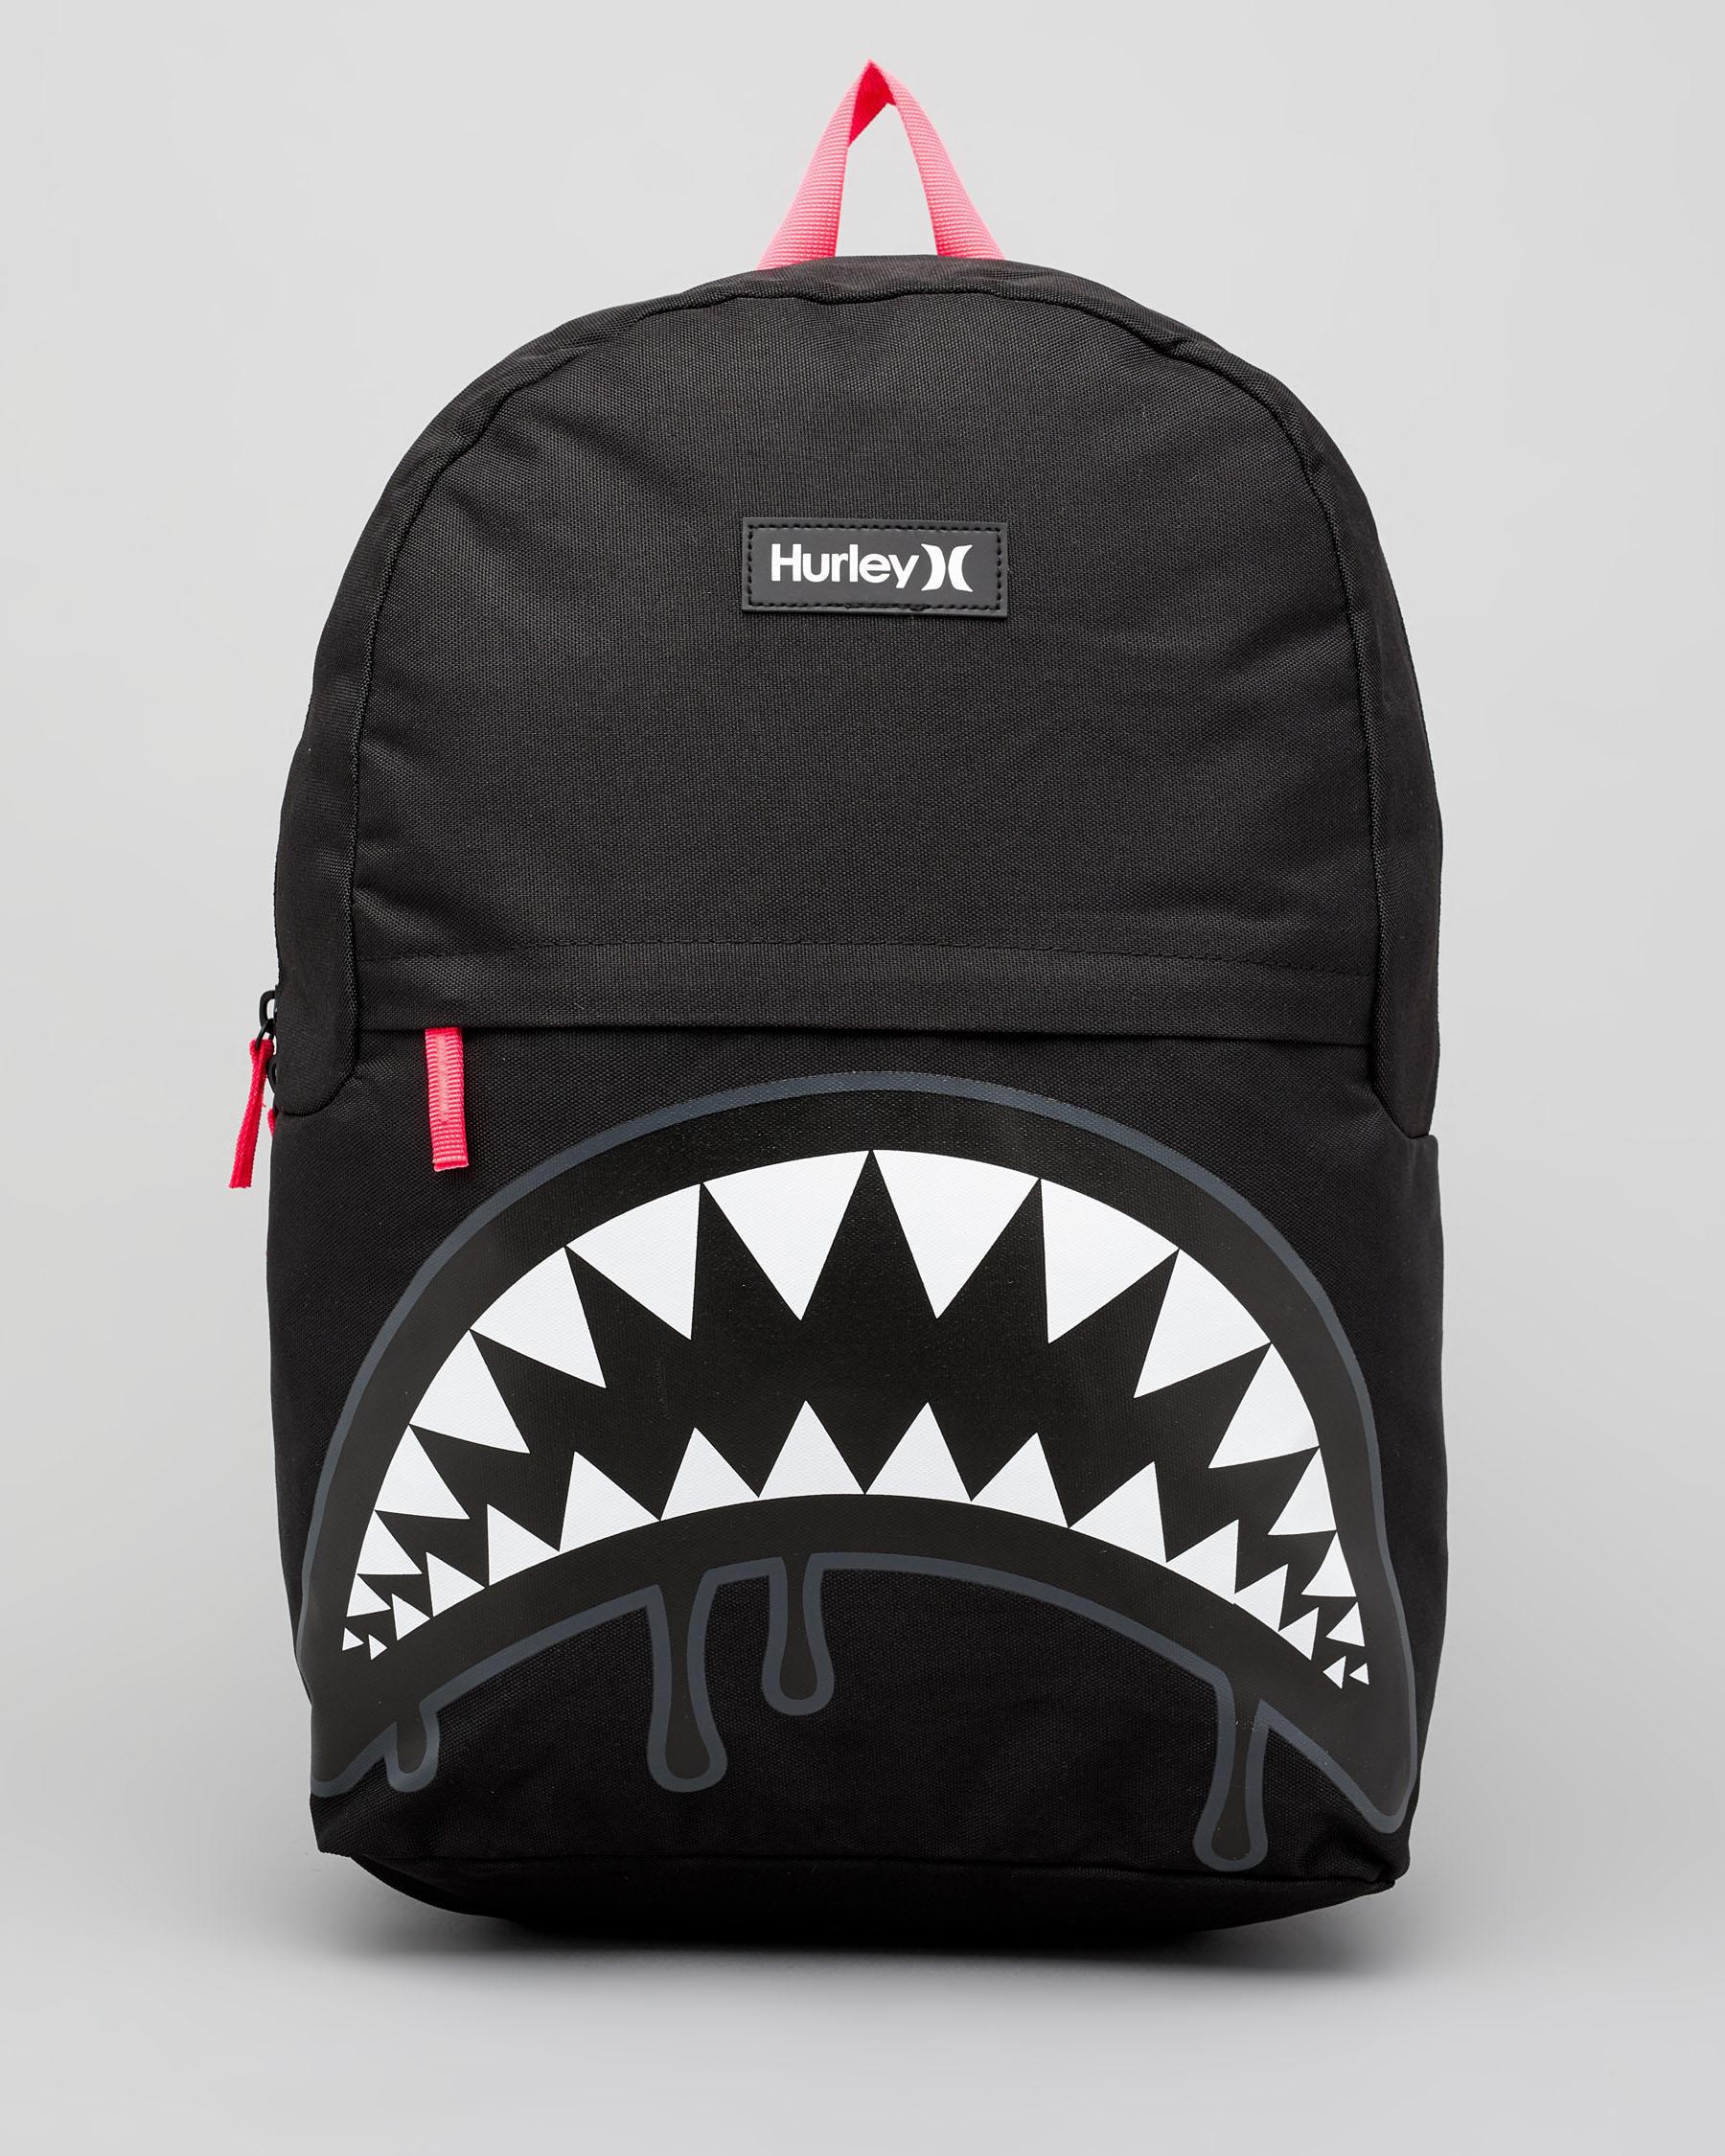 Sprayground Unisex Black Ghost Nubuck Shark Backpack